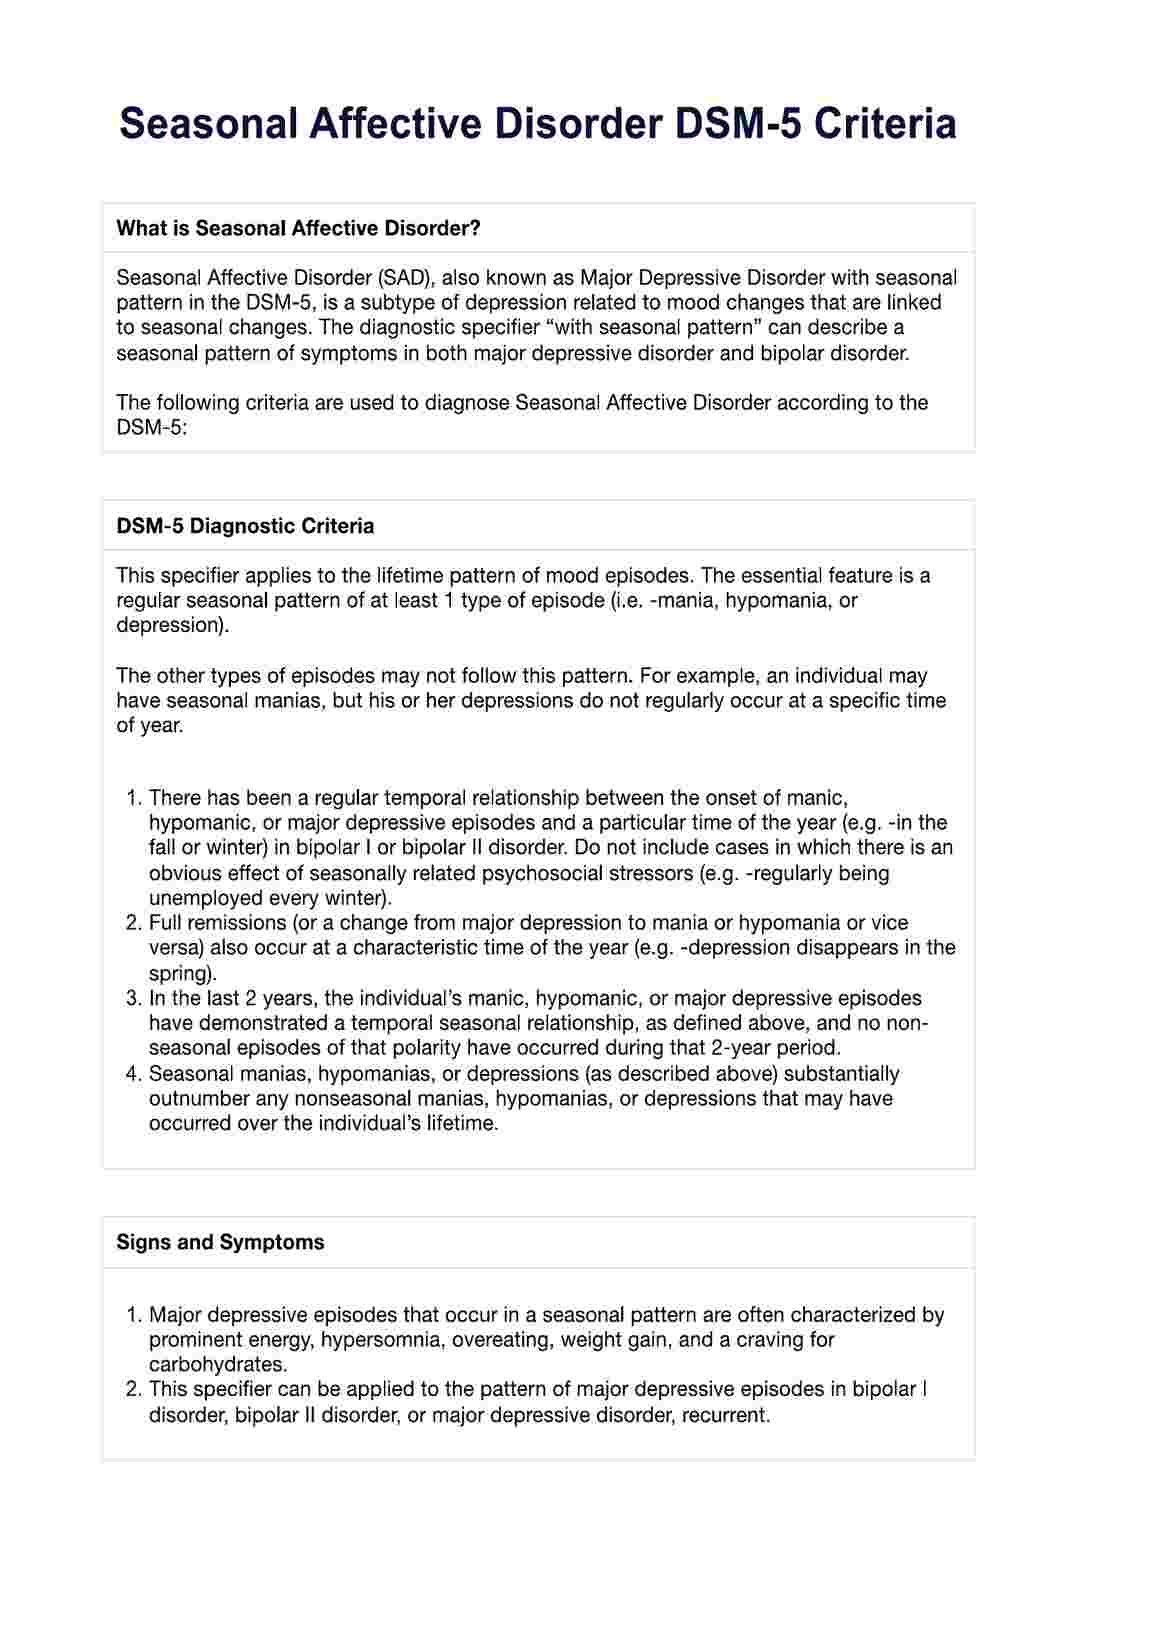 Seasonal Affective Disorder DSM 5 Criteria PDF Example